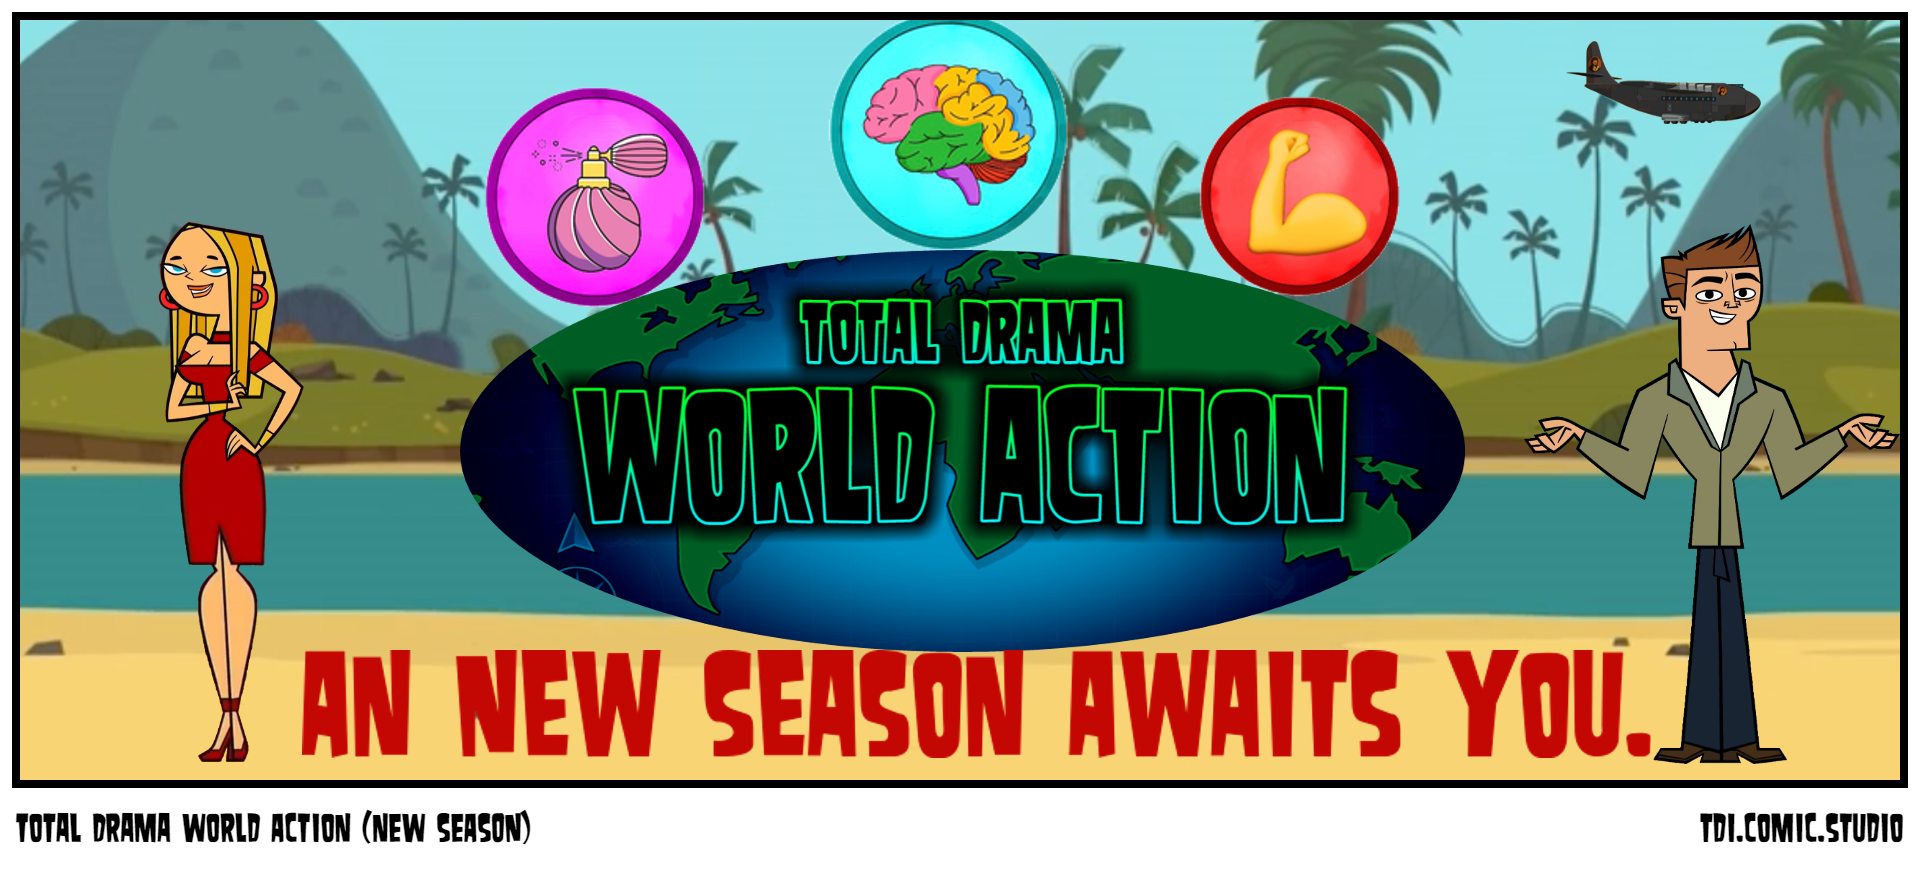 Total Drama World Action (nEW SEASON)